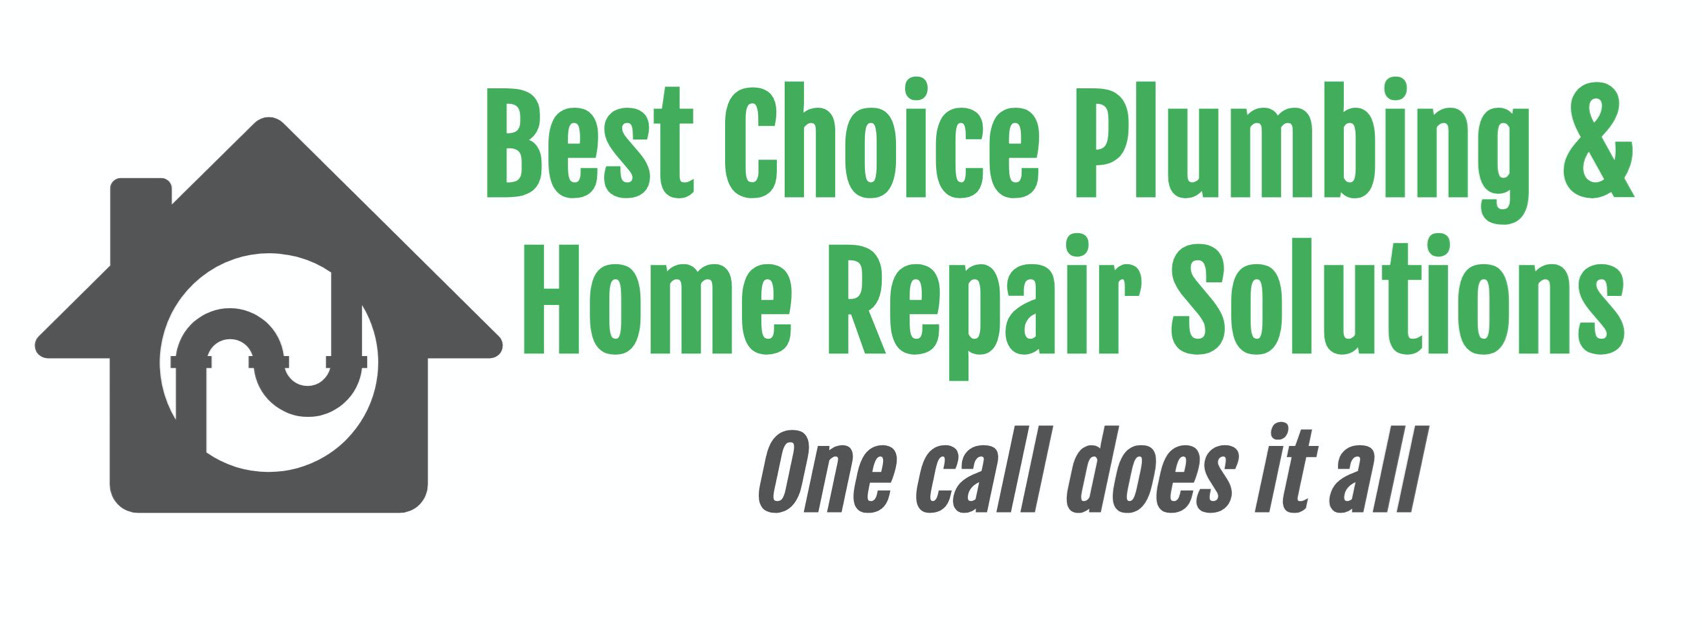 Best Choice Plumbing Home Repair Solutions